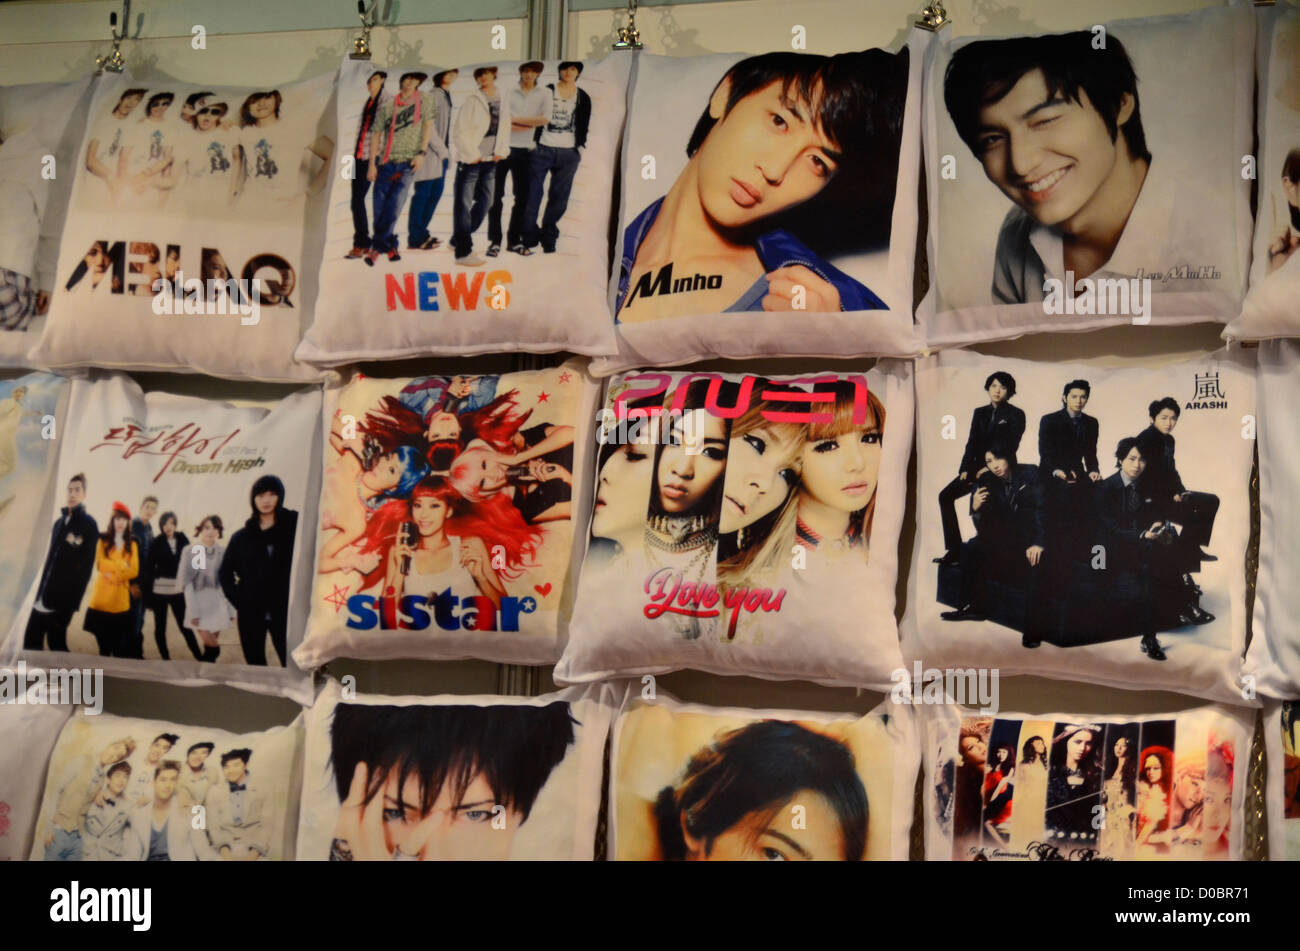 Japan pop pillows in XVIII saló del Manga in Barcelona Stock Photo